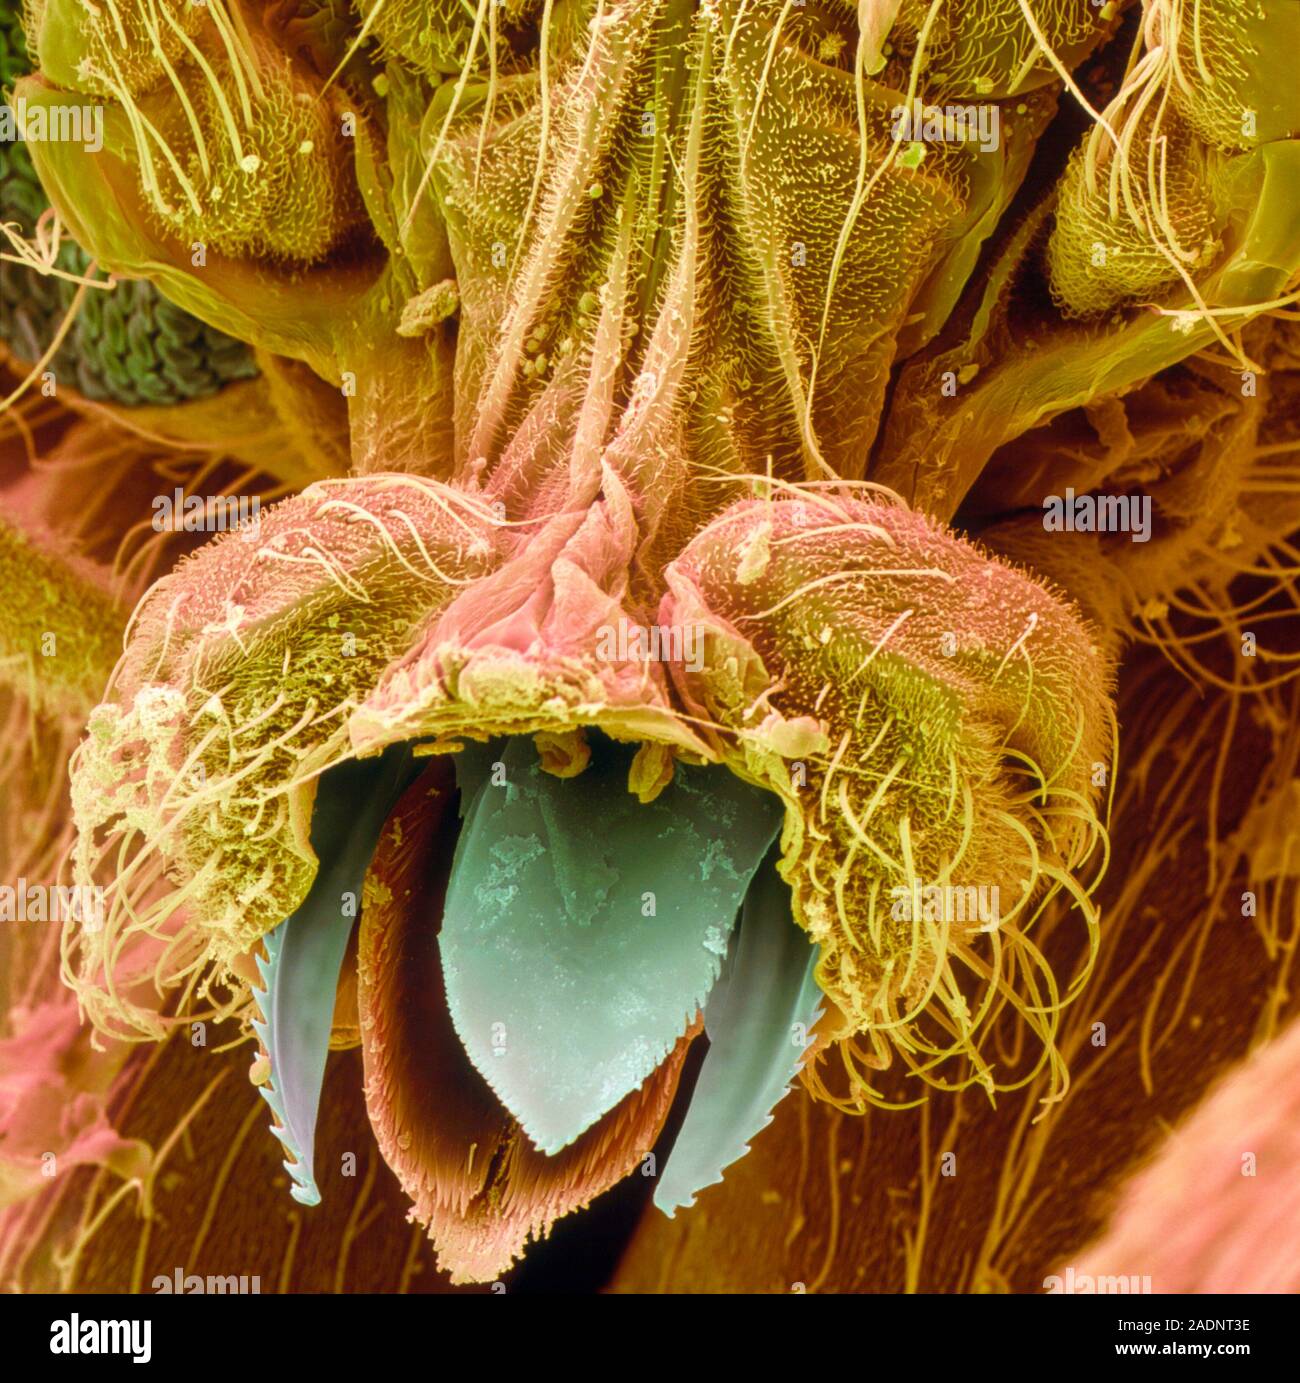 Мошка гнус под микроскопом